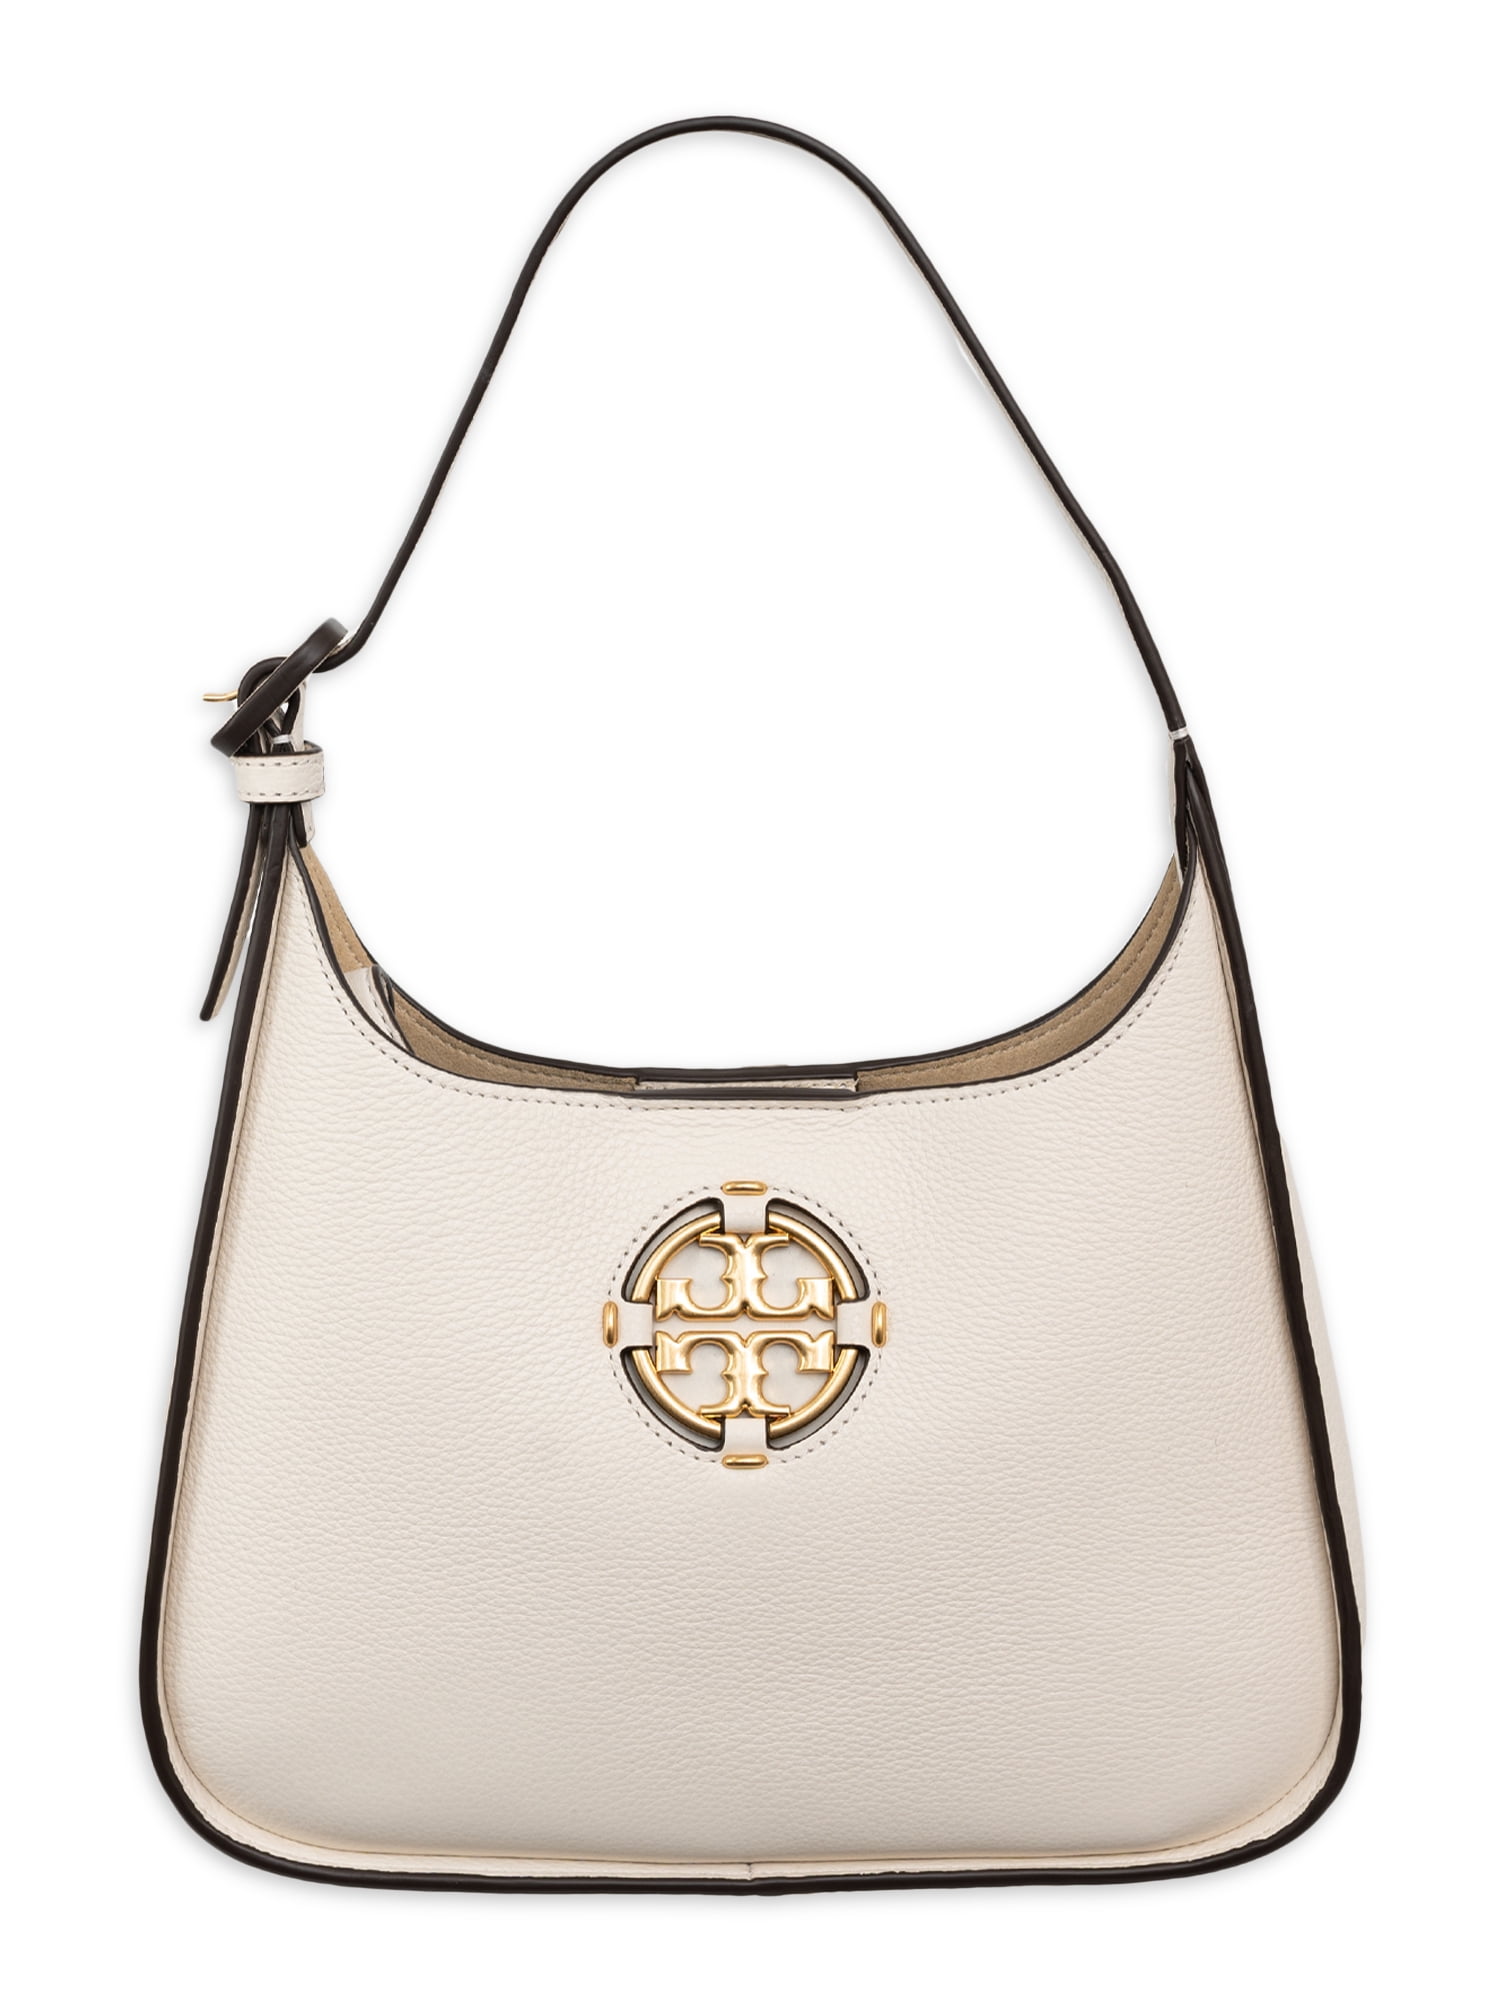 Tory Burch Women's Miller Small Classic Shoulder Handbag - New Ivory -  